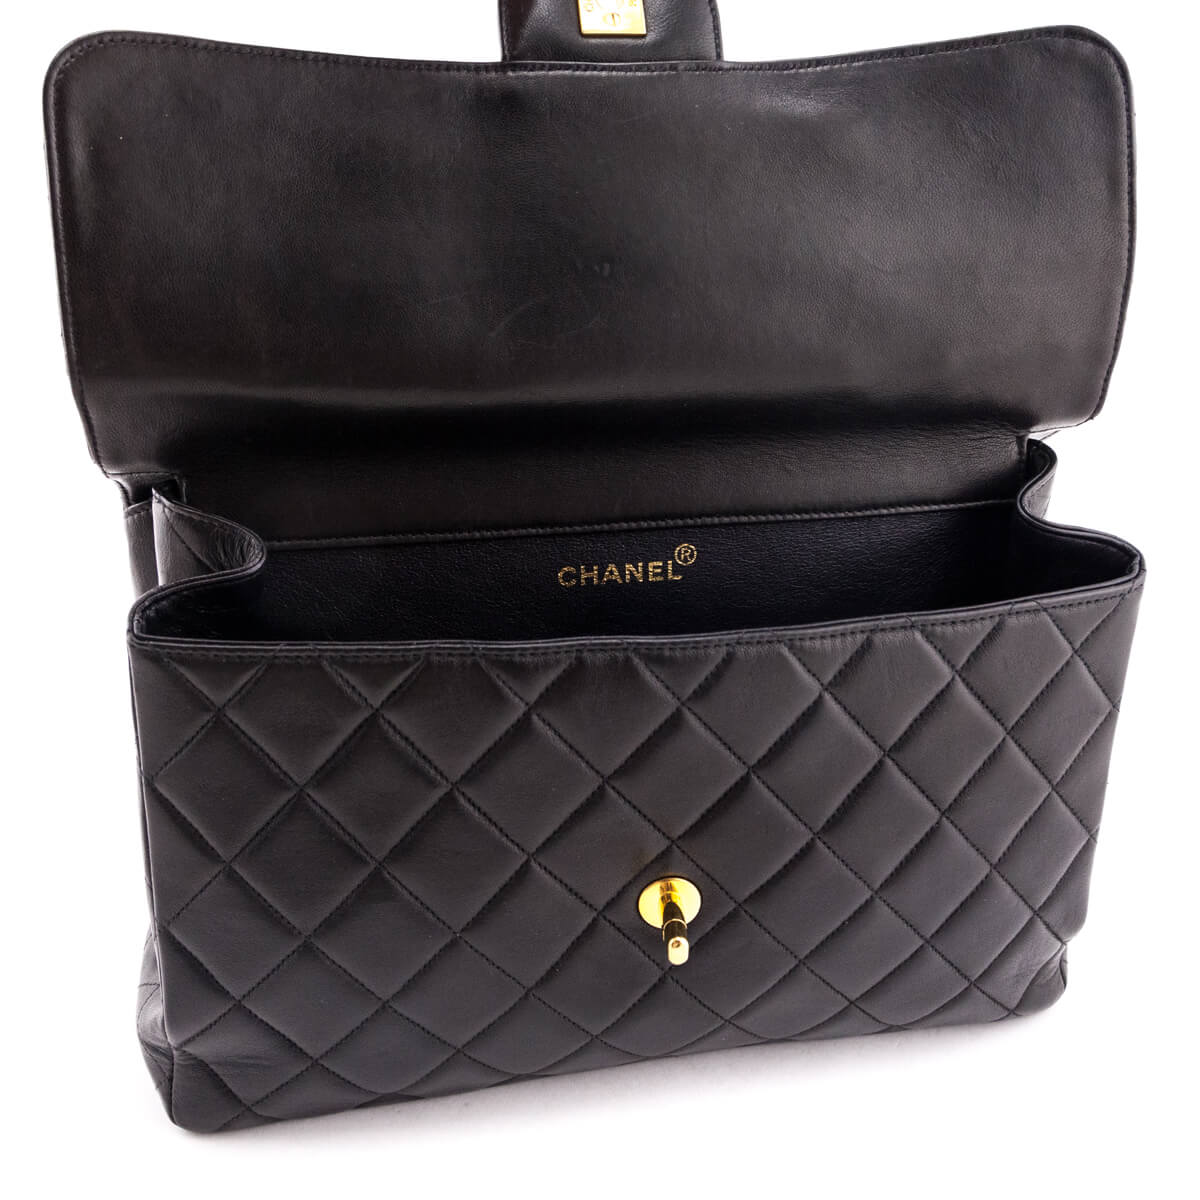 What Do Real Chanel Handbags Look Like Inside  Handbags  Fashion   YouTube